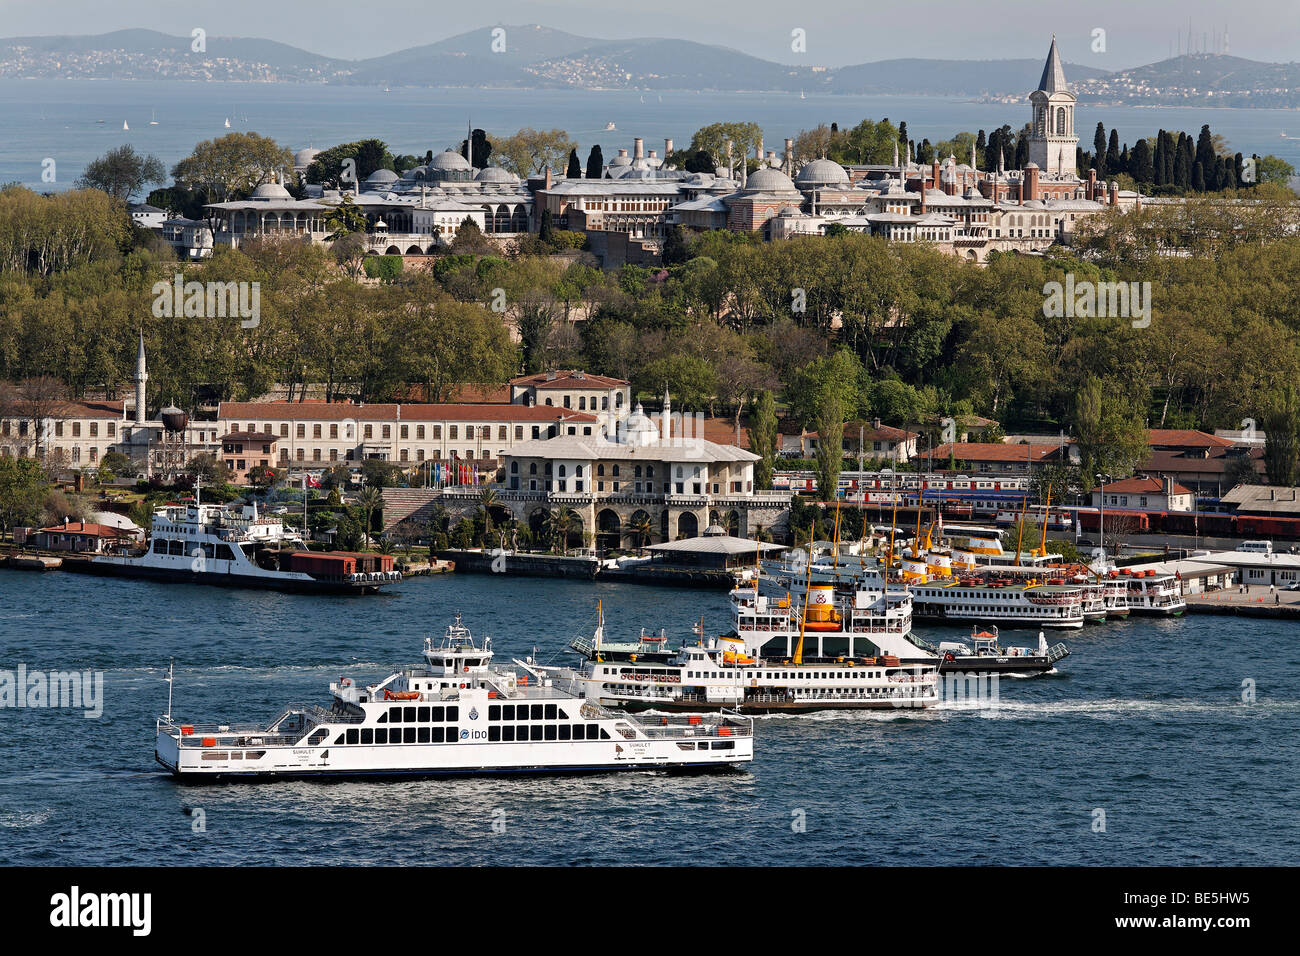 Topkapi Palace and boat jetty Sarayburnu, view from the Galata Tower Istanbul, Turkey Stock Photo